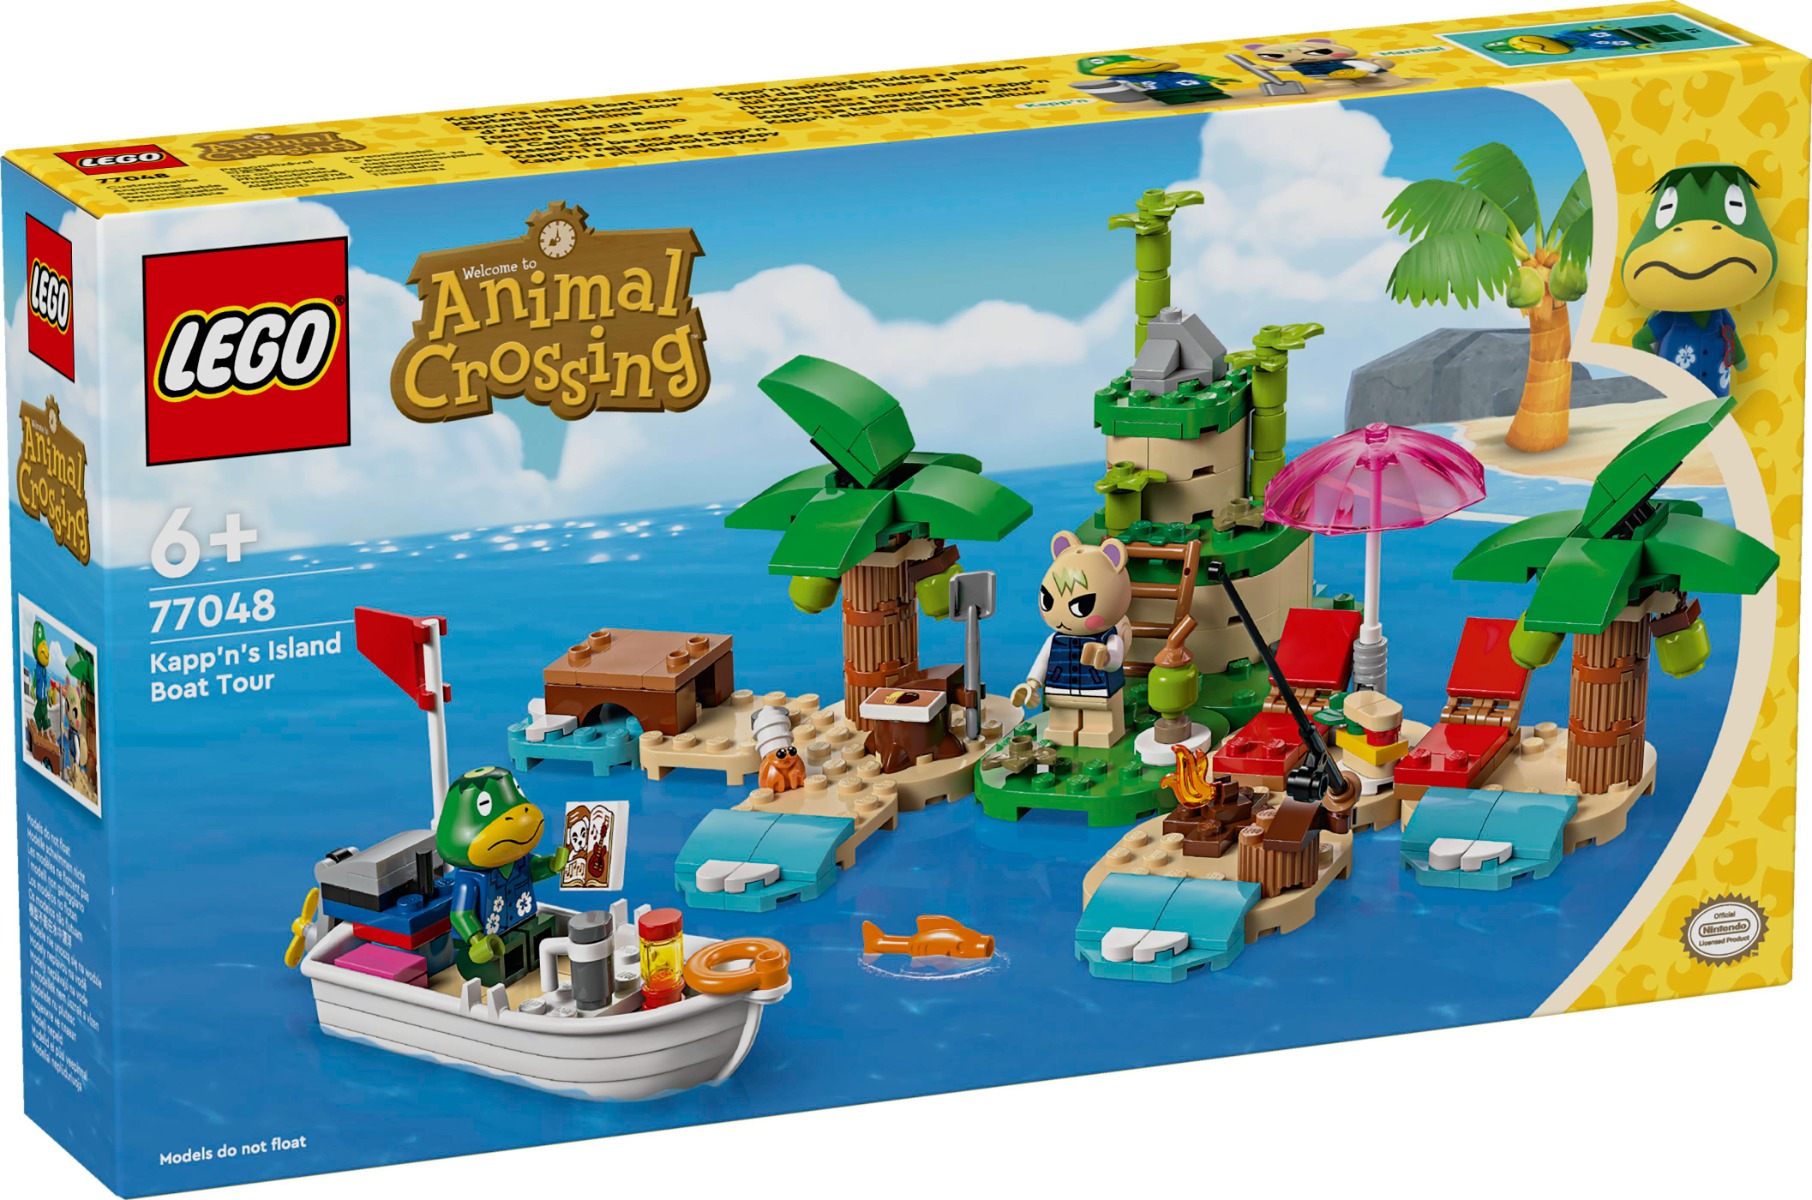 Lego® Animal Crossing - Turul De Insula In Barca Al Lui Kapp'n (77048)